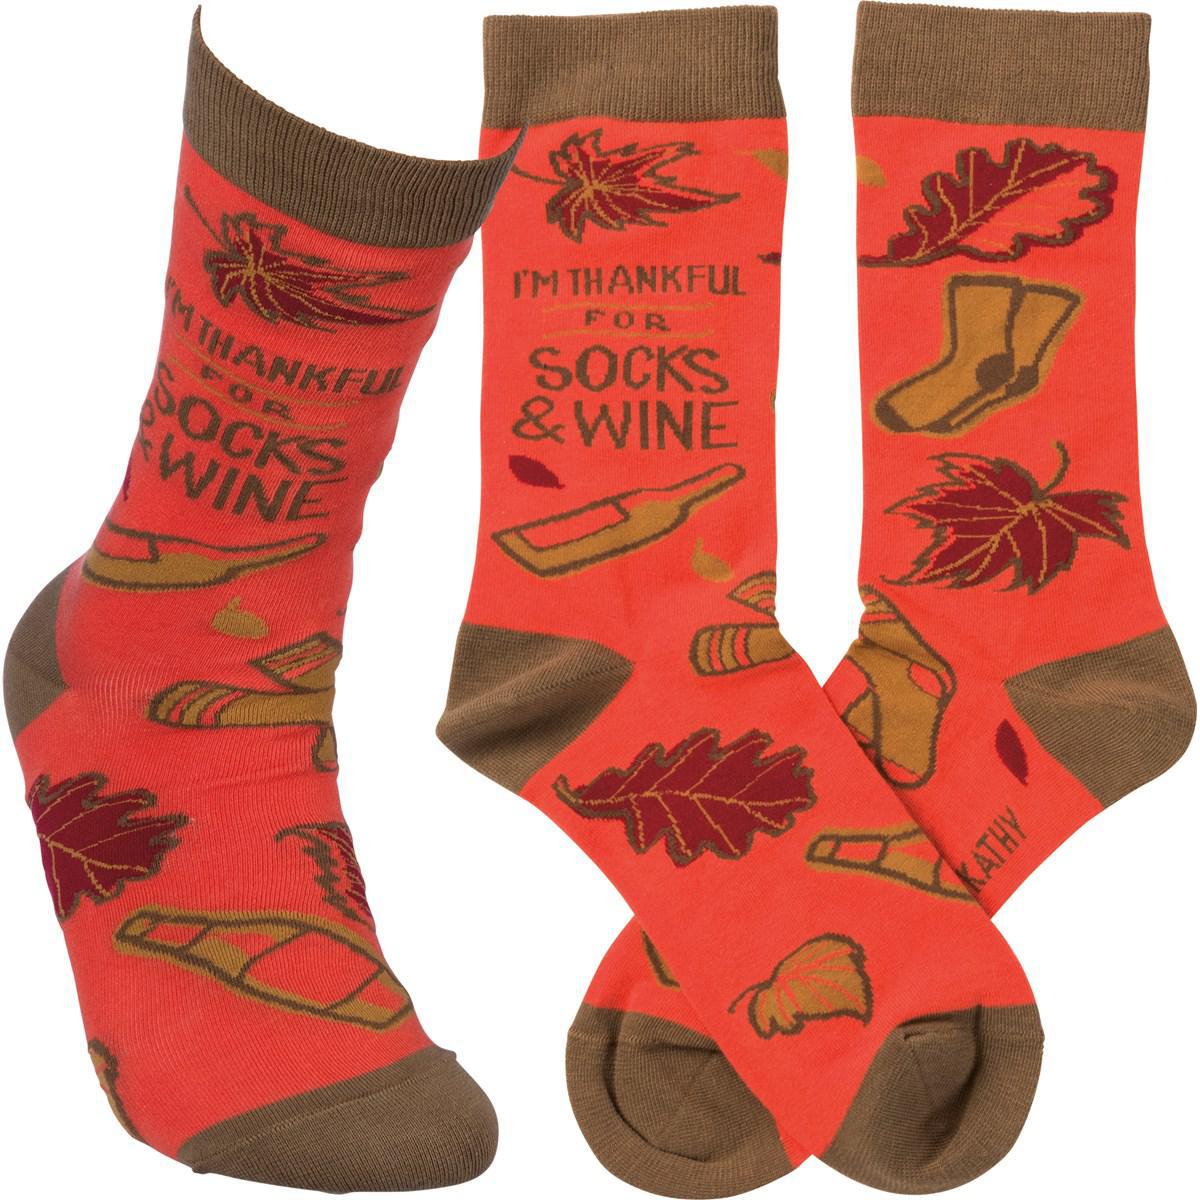 Thankful For Socks & Wine Socks